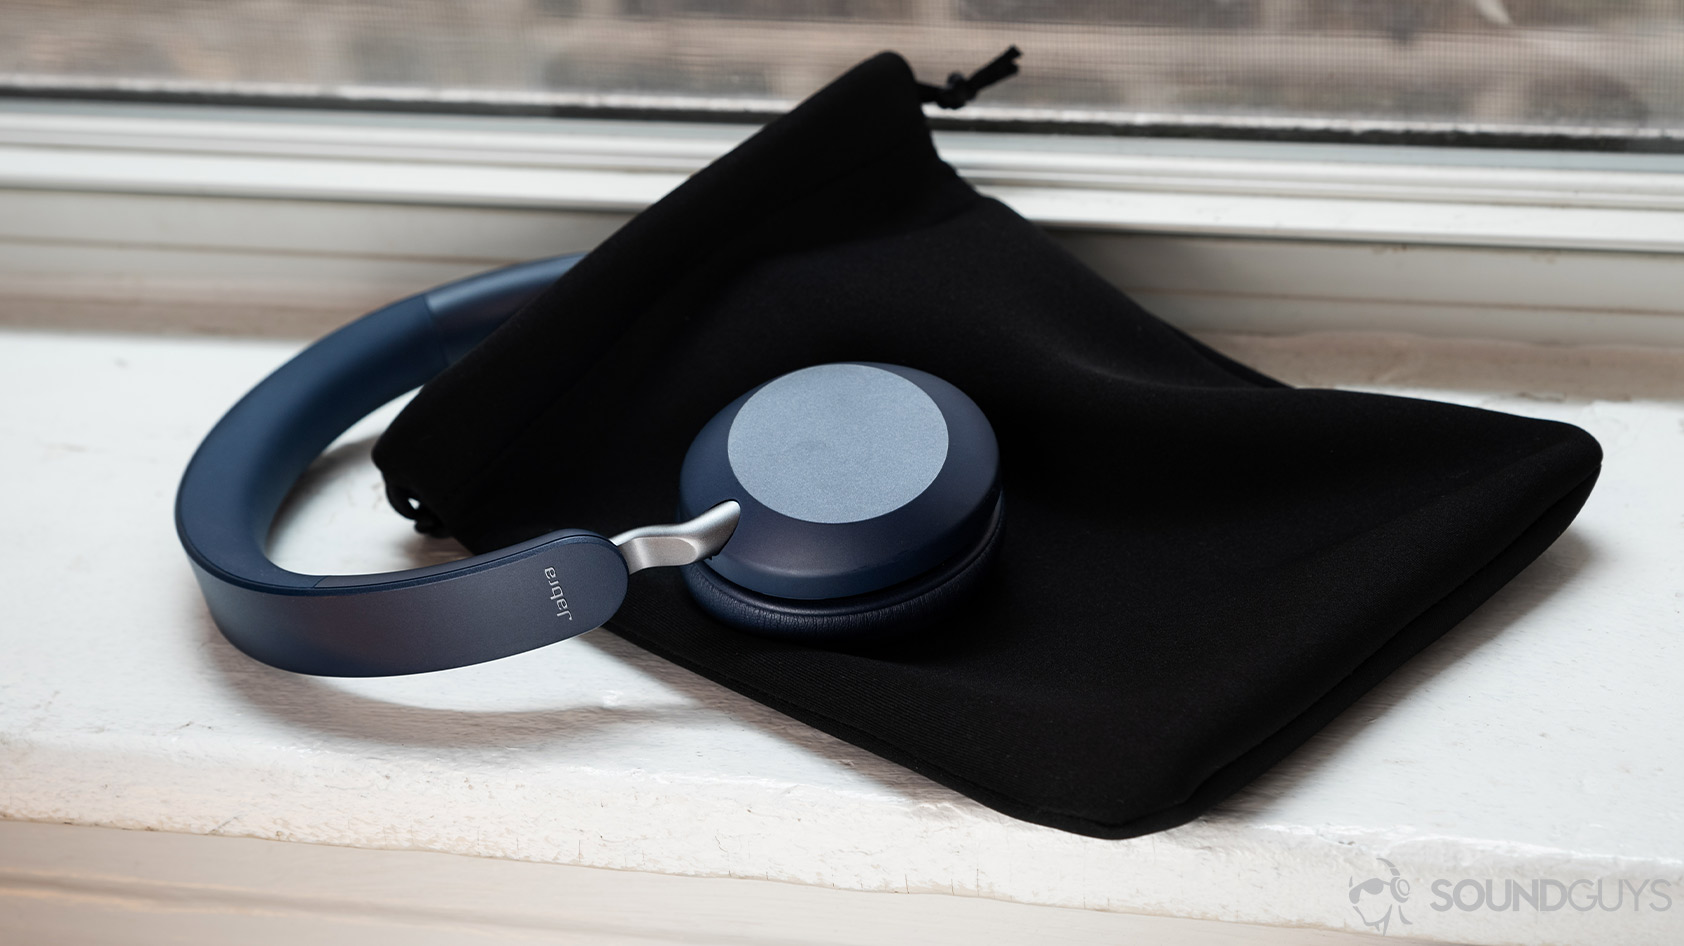 Jabra Elite 45h review: Take these headphones anywhere - SoundGuys